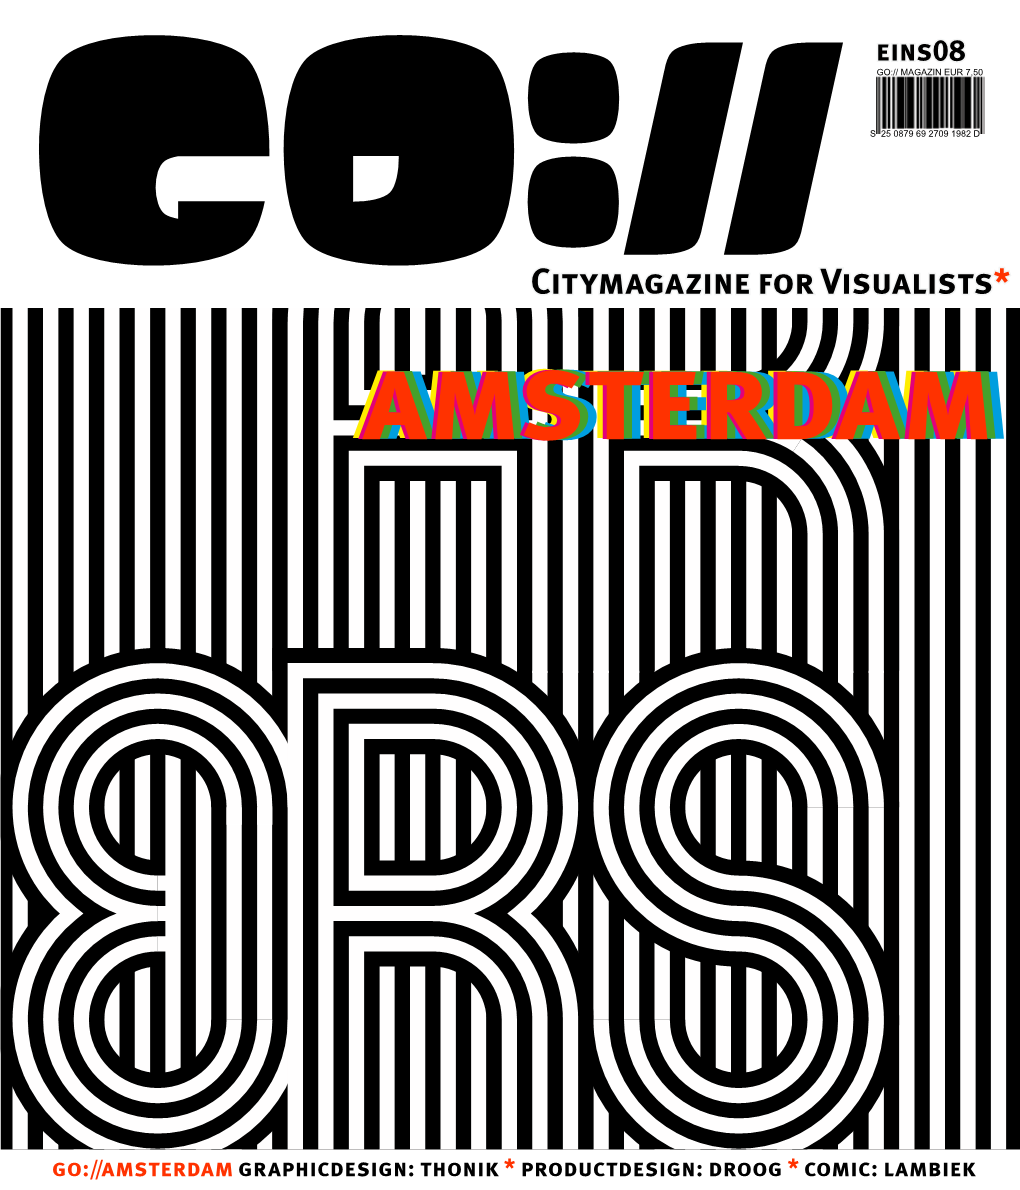 Citymagazine for Visualists* Amsterdamamsterdamamsterdamamsterdamamsterdam